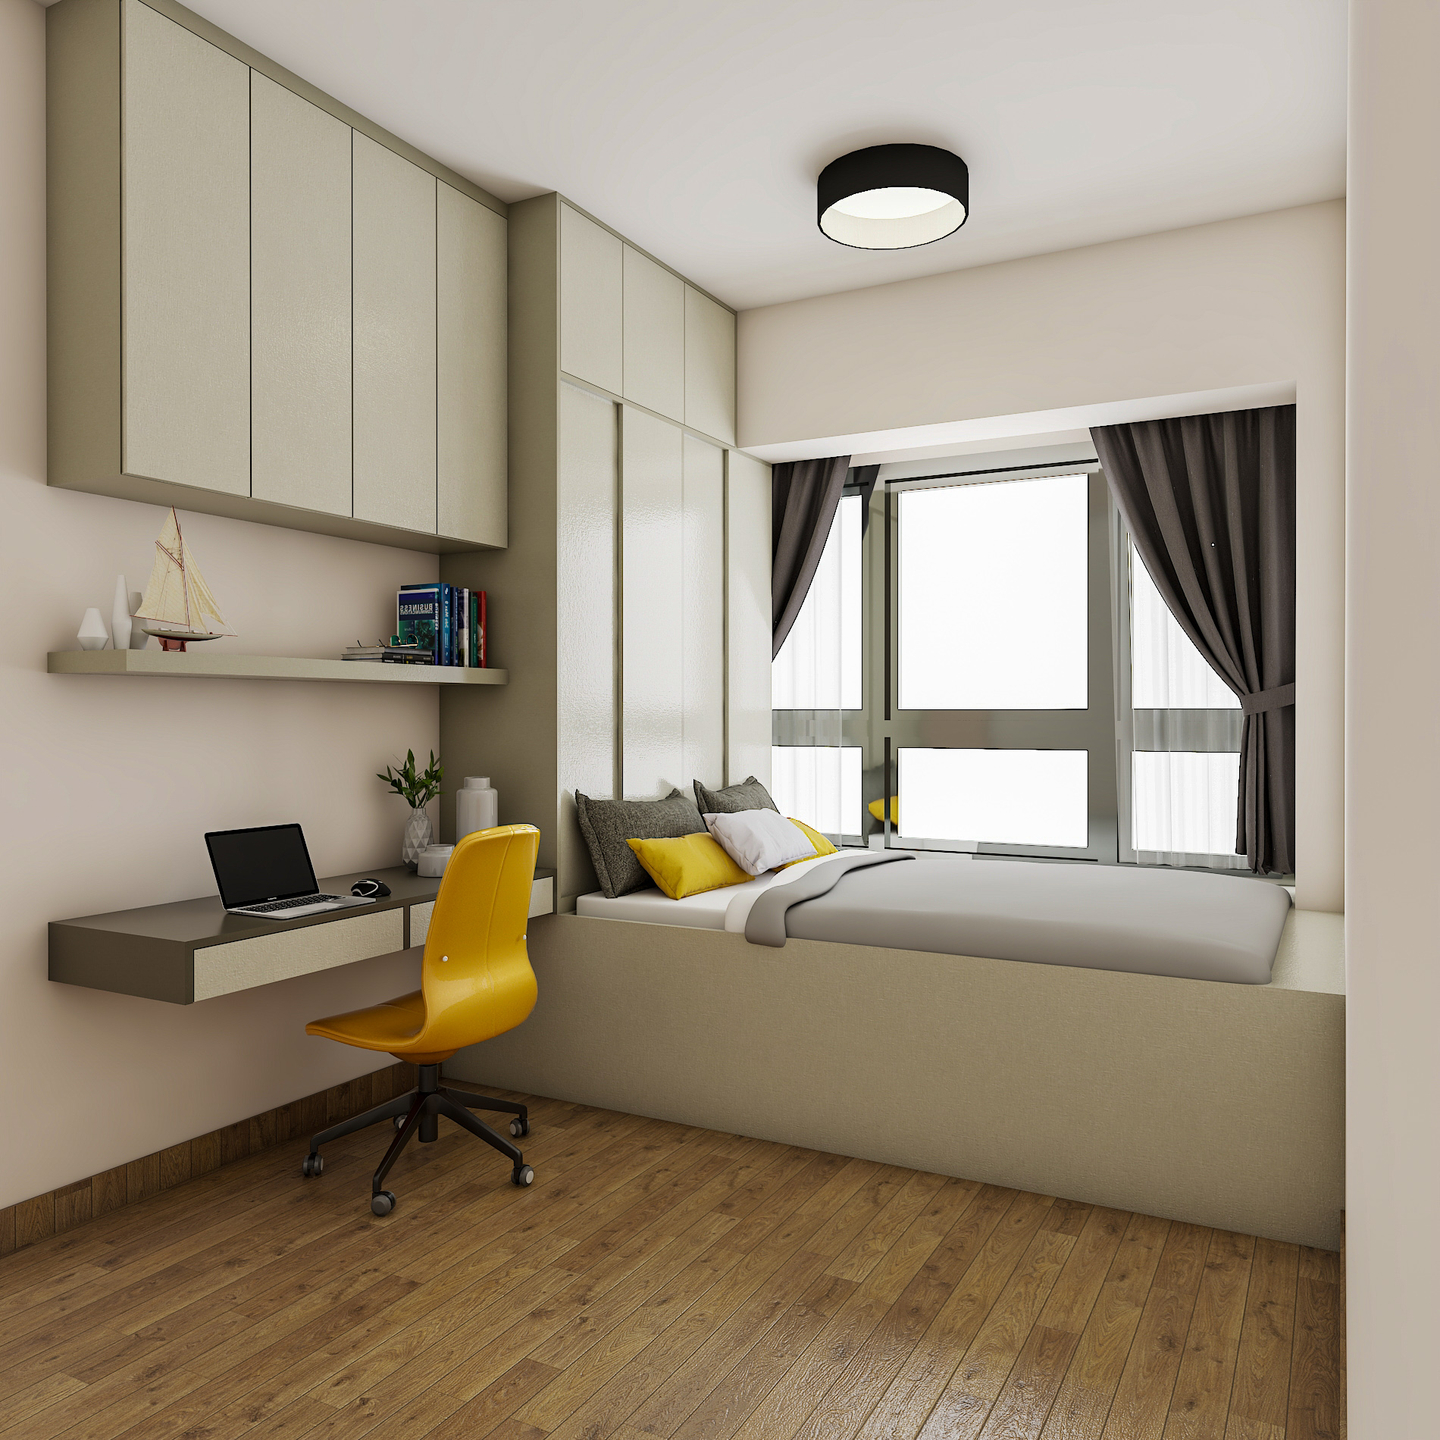 Compact Modern Bedroom Interior Design with Study Desk - Livspace